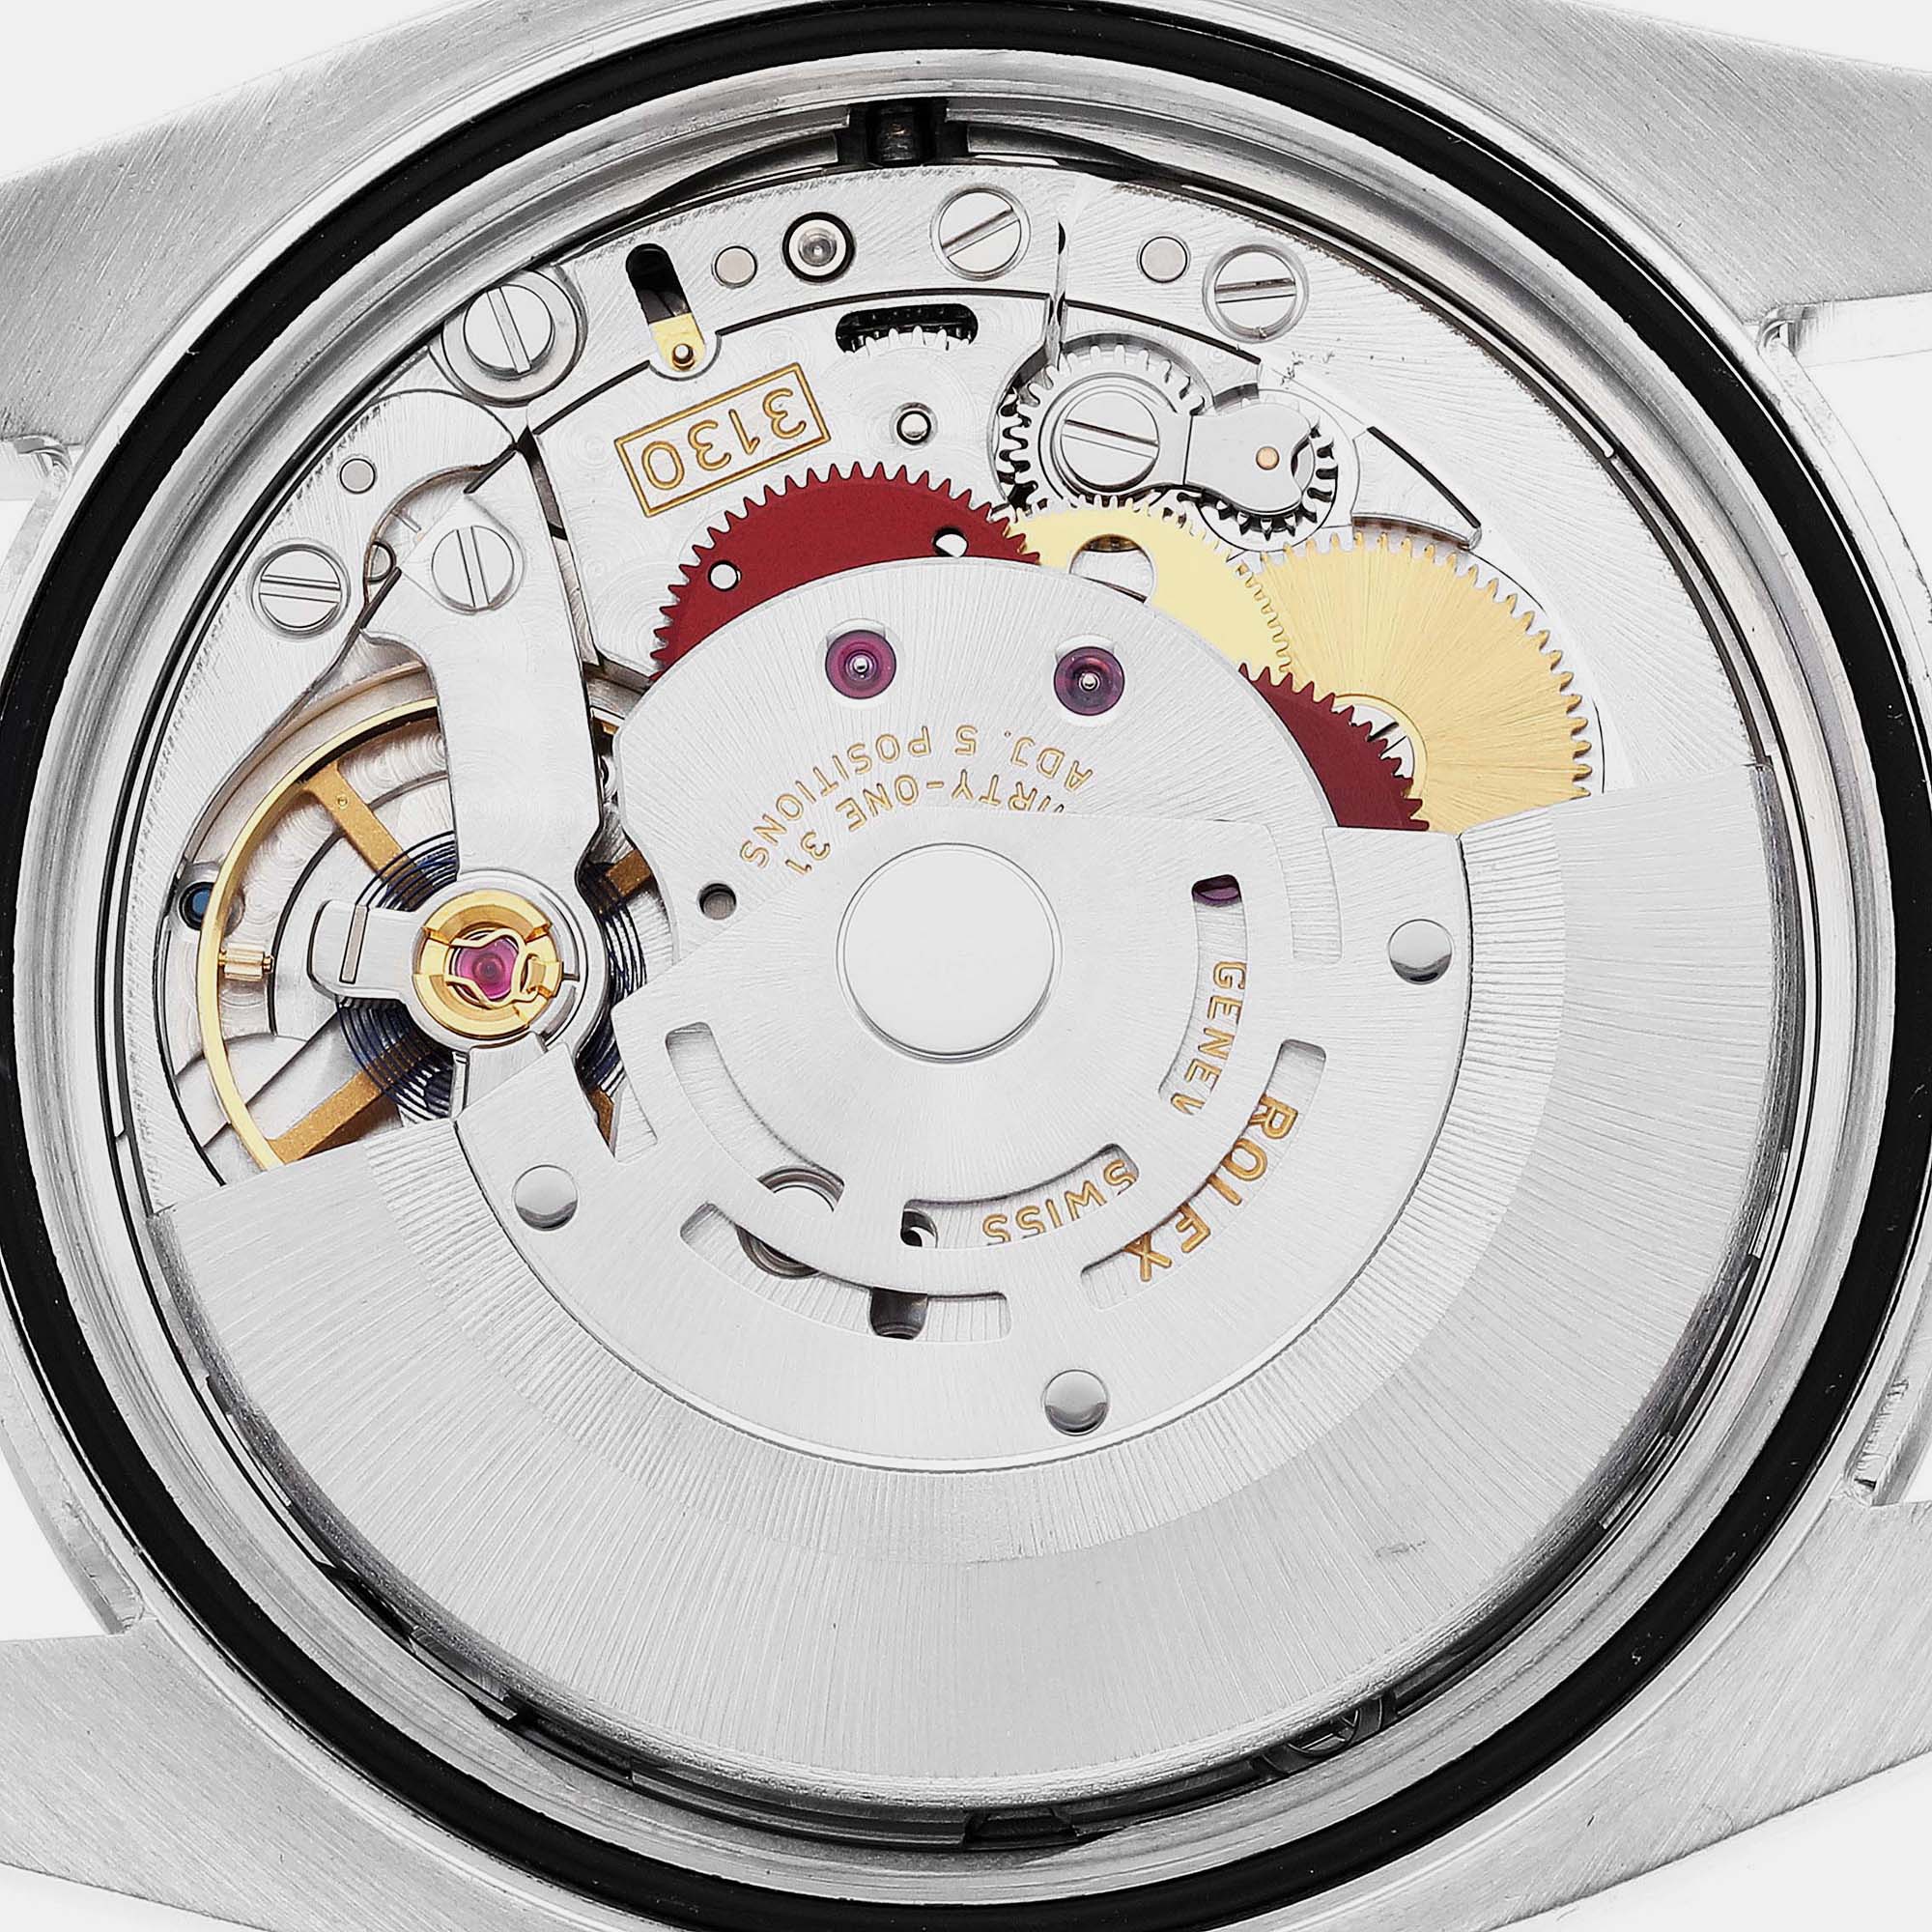 Rolex Oyster Perpetual Silver Dial Steel Men's Watch 116000 36 Mm